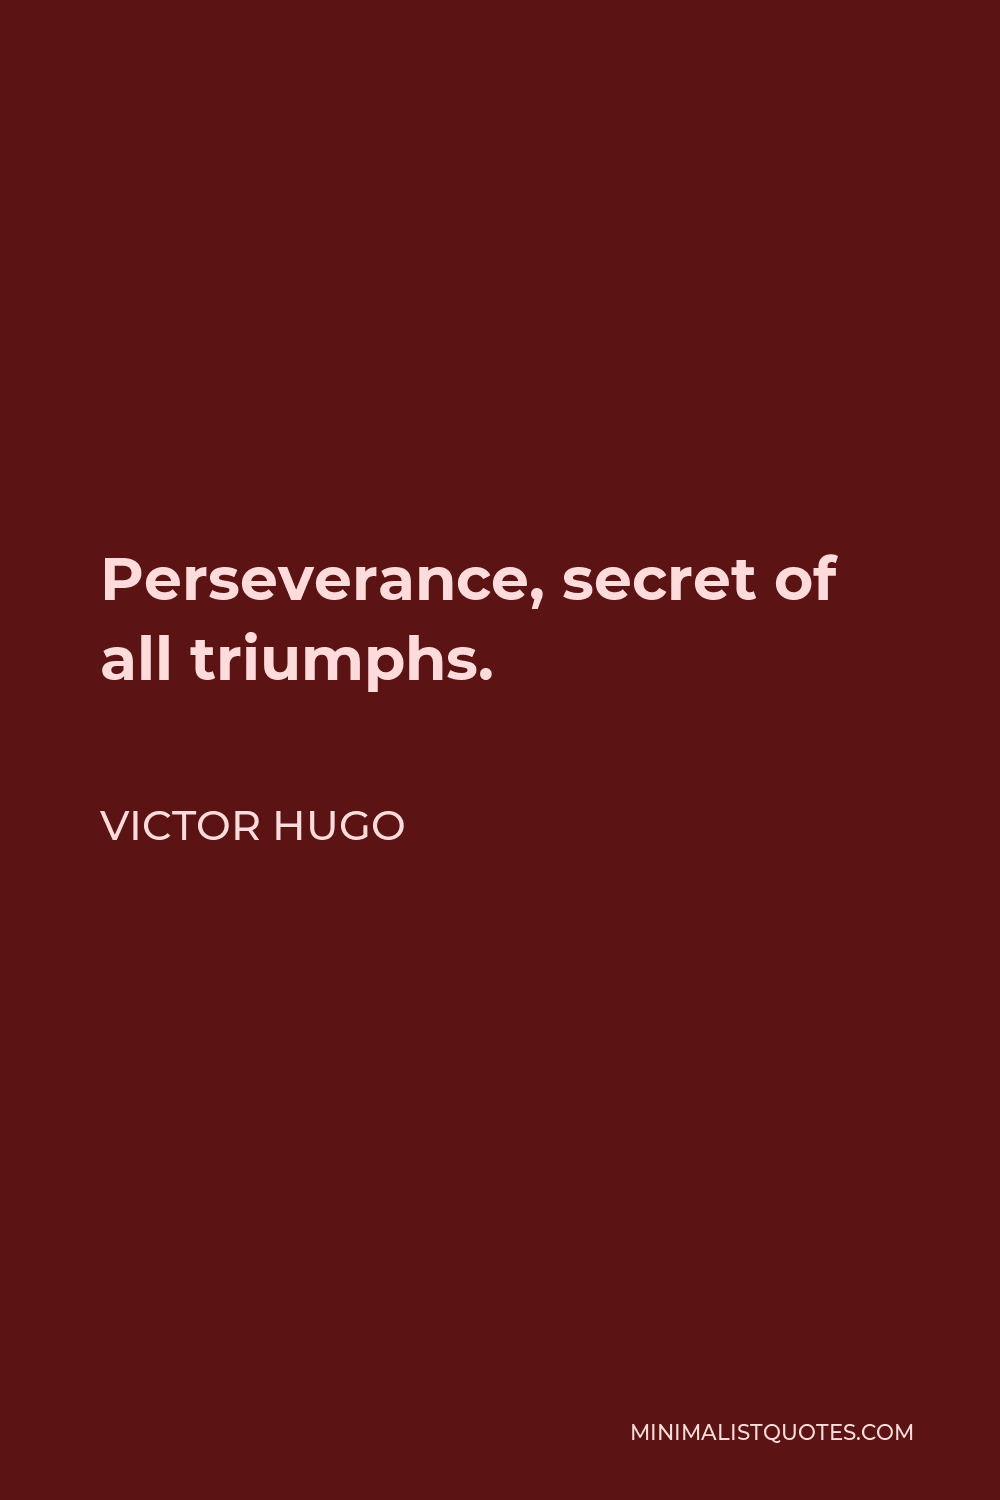 Victor Hugo Quote - Perseverance, secret of all triumphs.